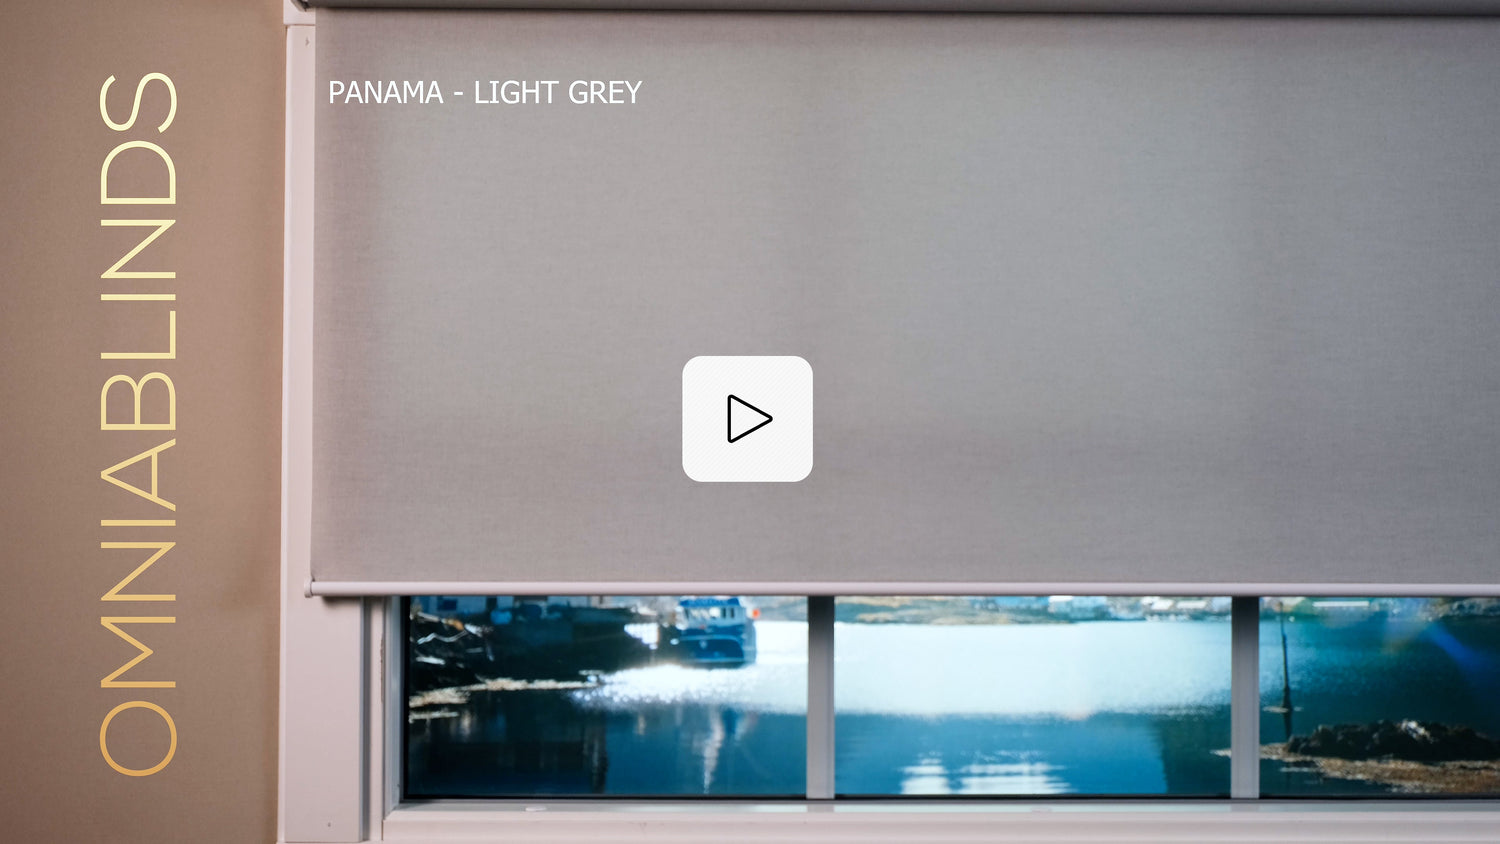 Panama - Light Grey